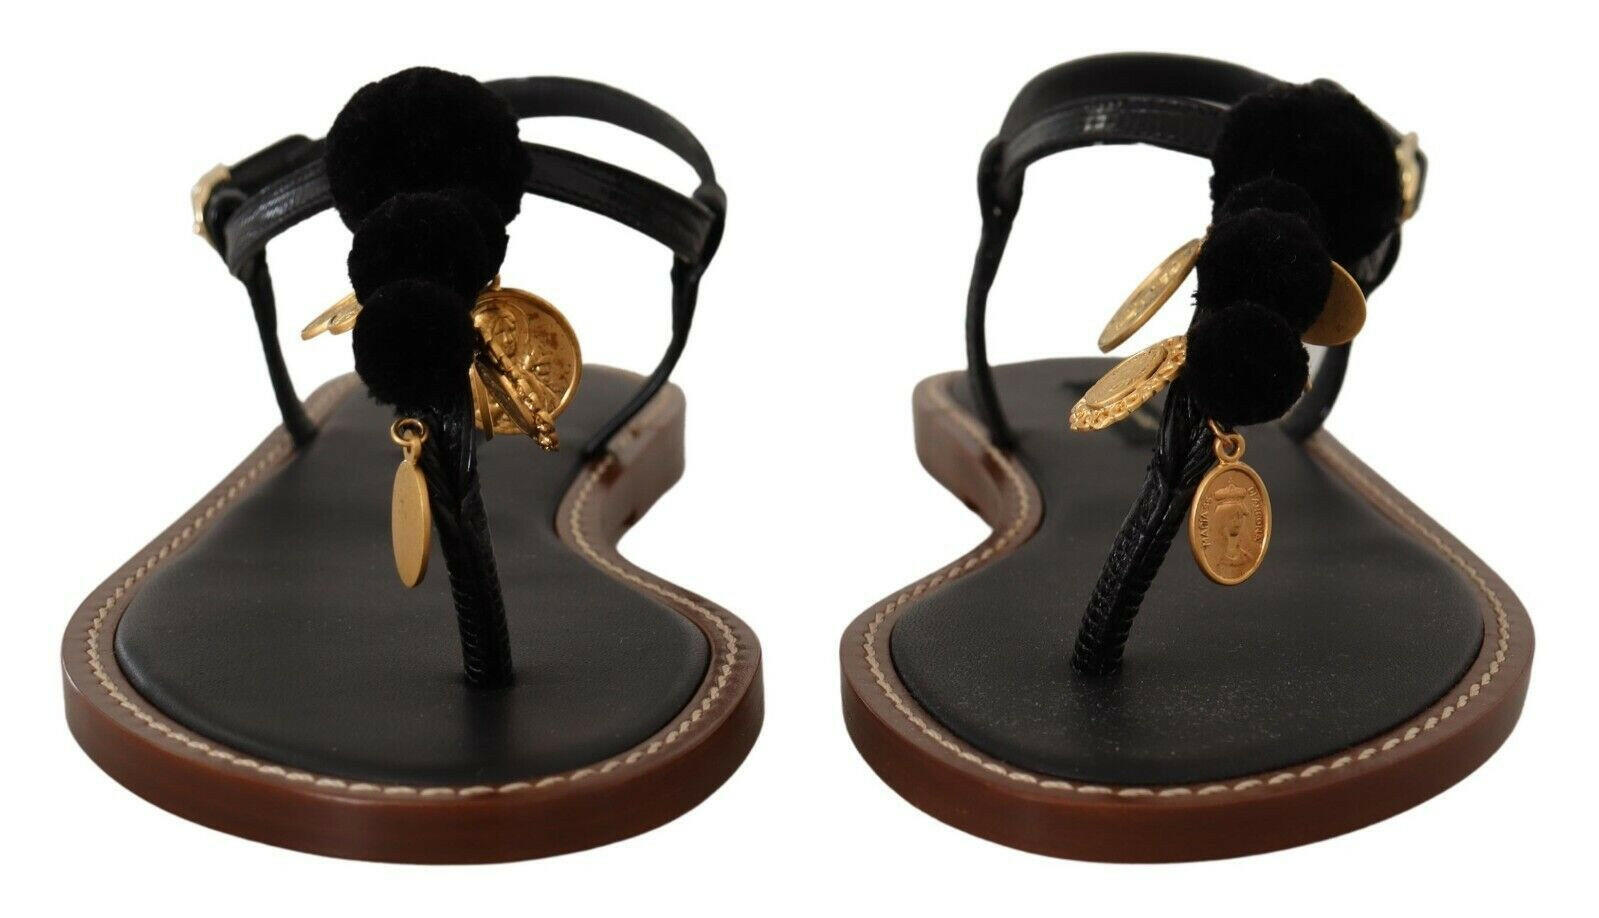 Dolce & Gabbana Black Leather Coins Flip Flops Sandals Shoes - GENUINE AUTHENTIC BRAND LLC  